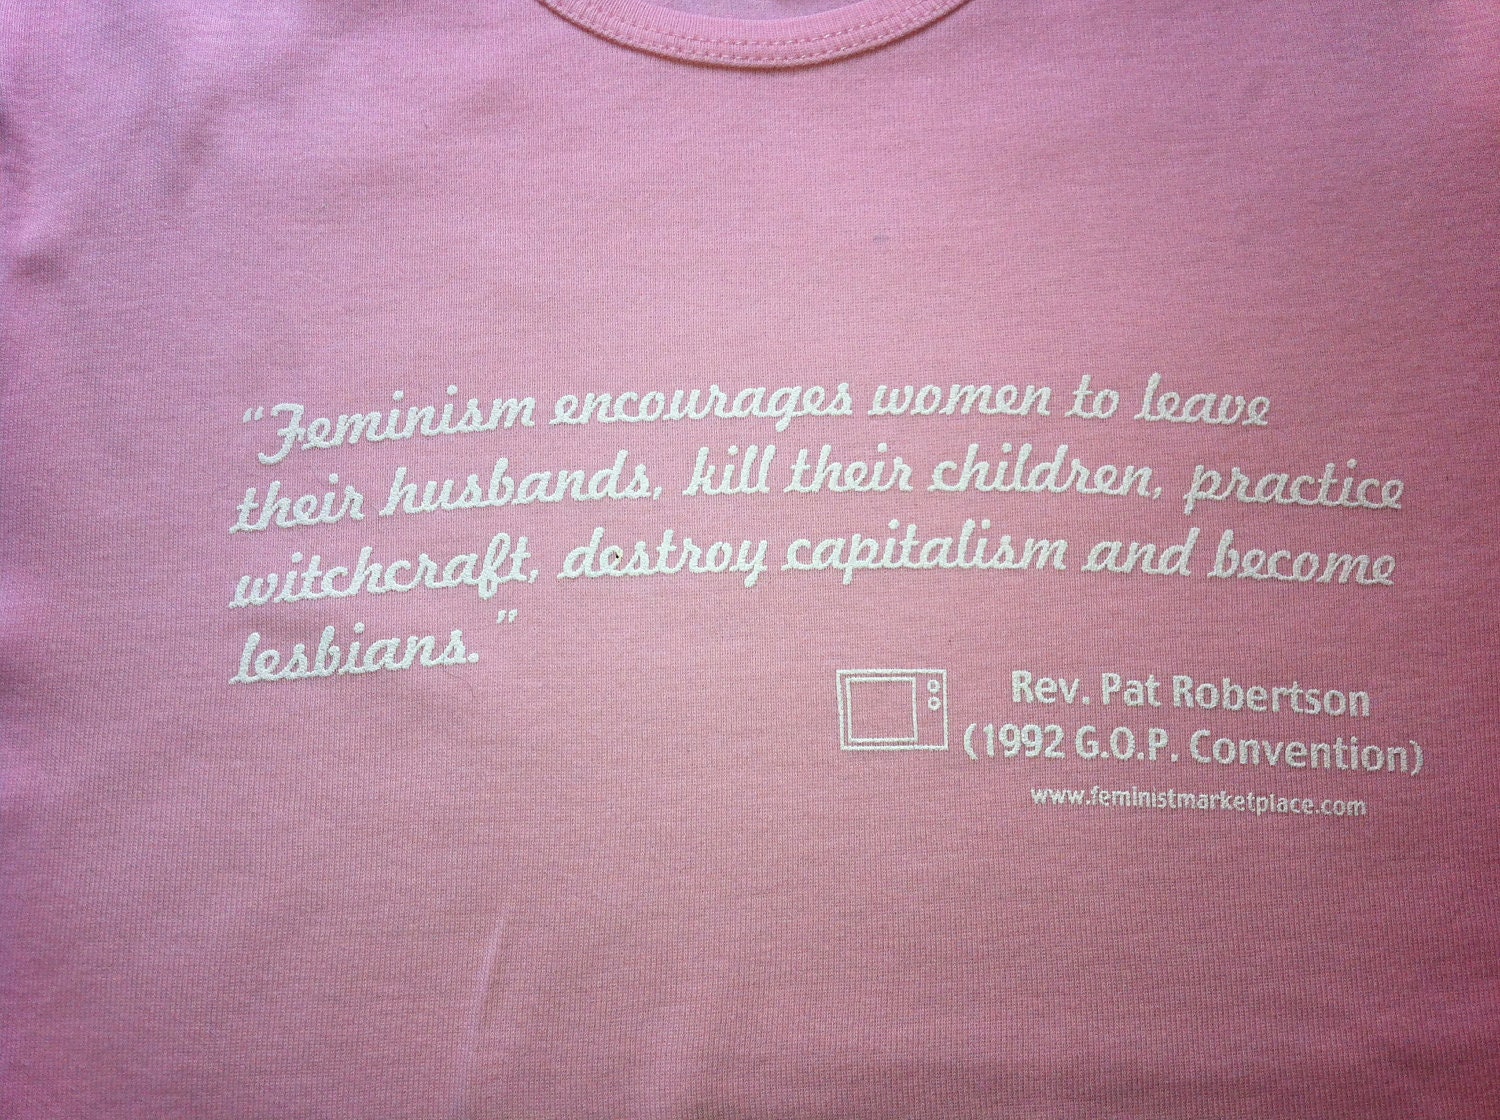 Pat Robertson Feminism